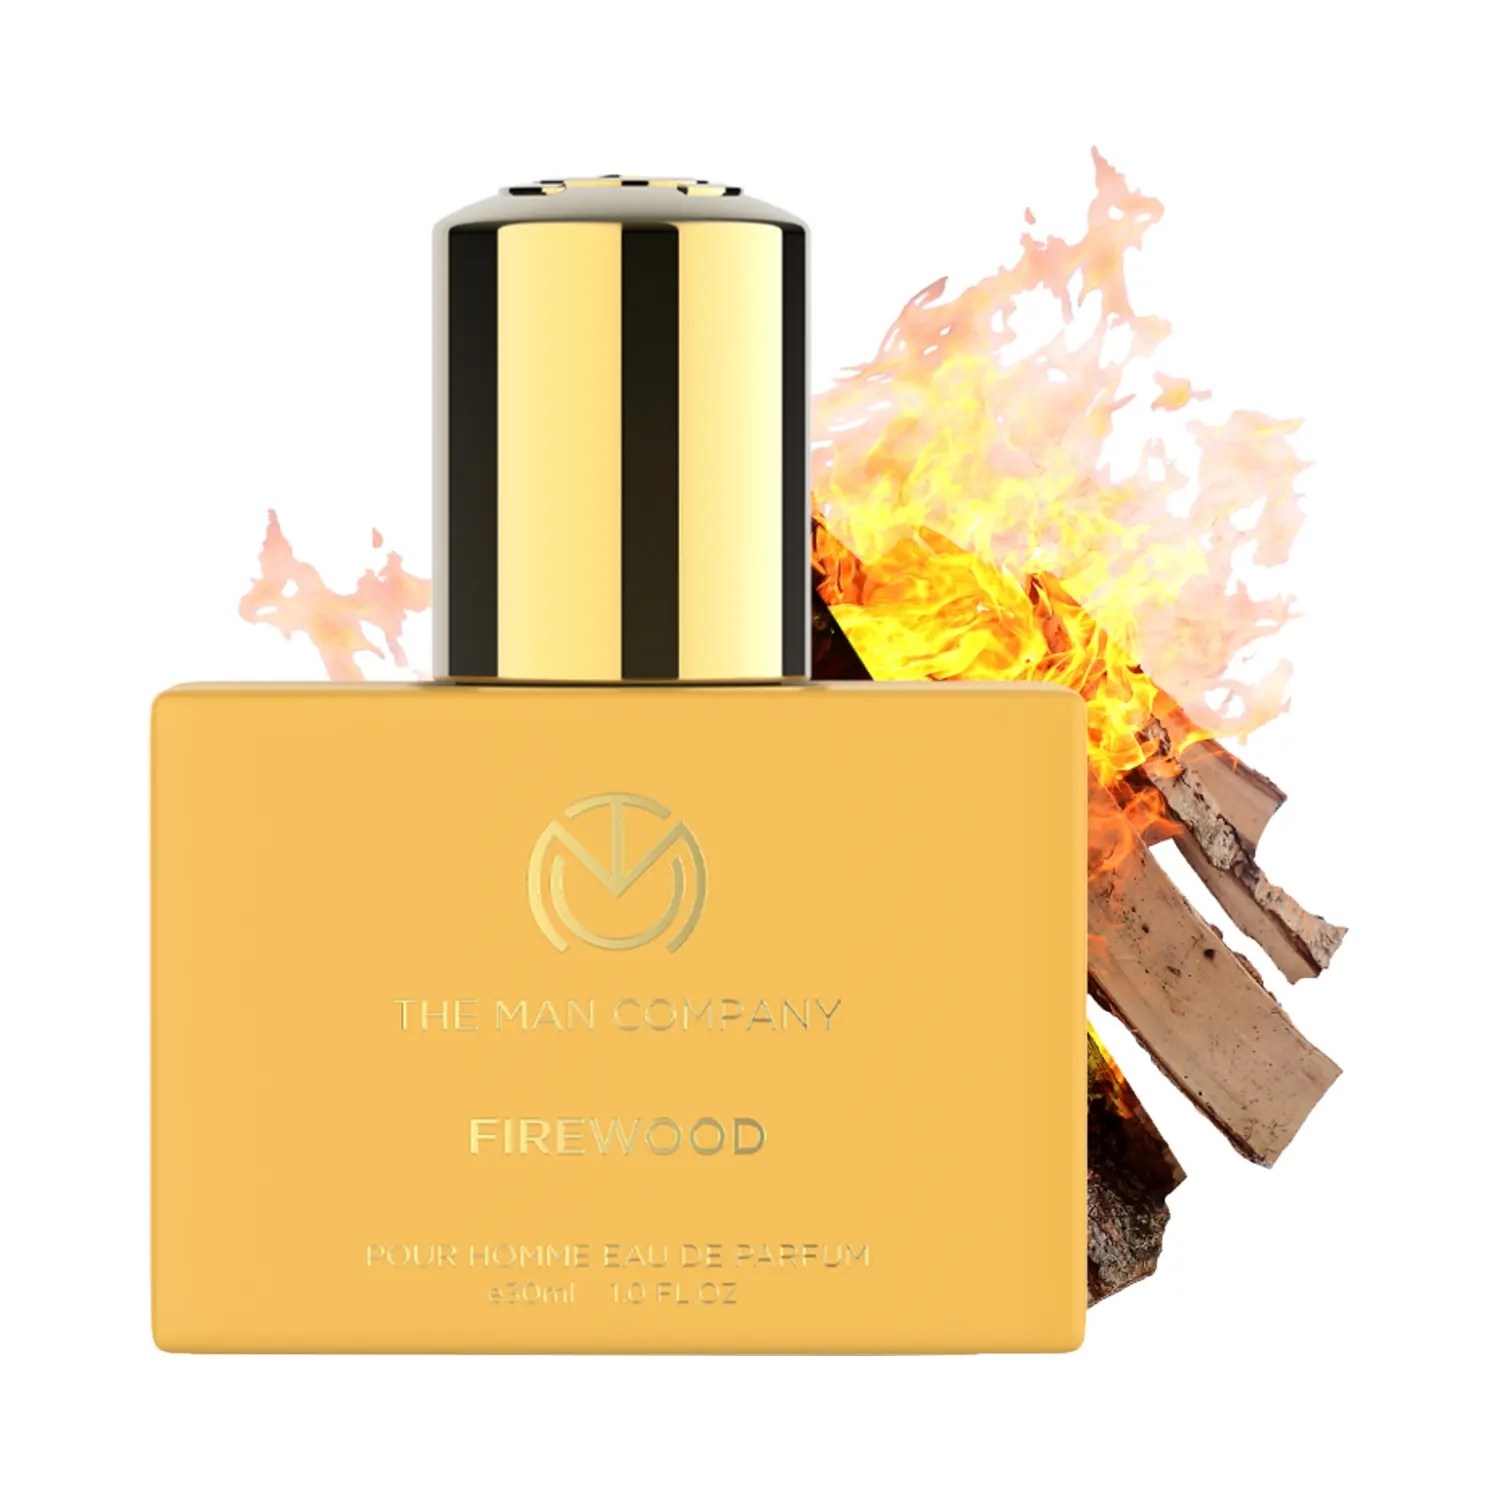 The Man Company Firewood Eau De Parfum (30ml)